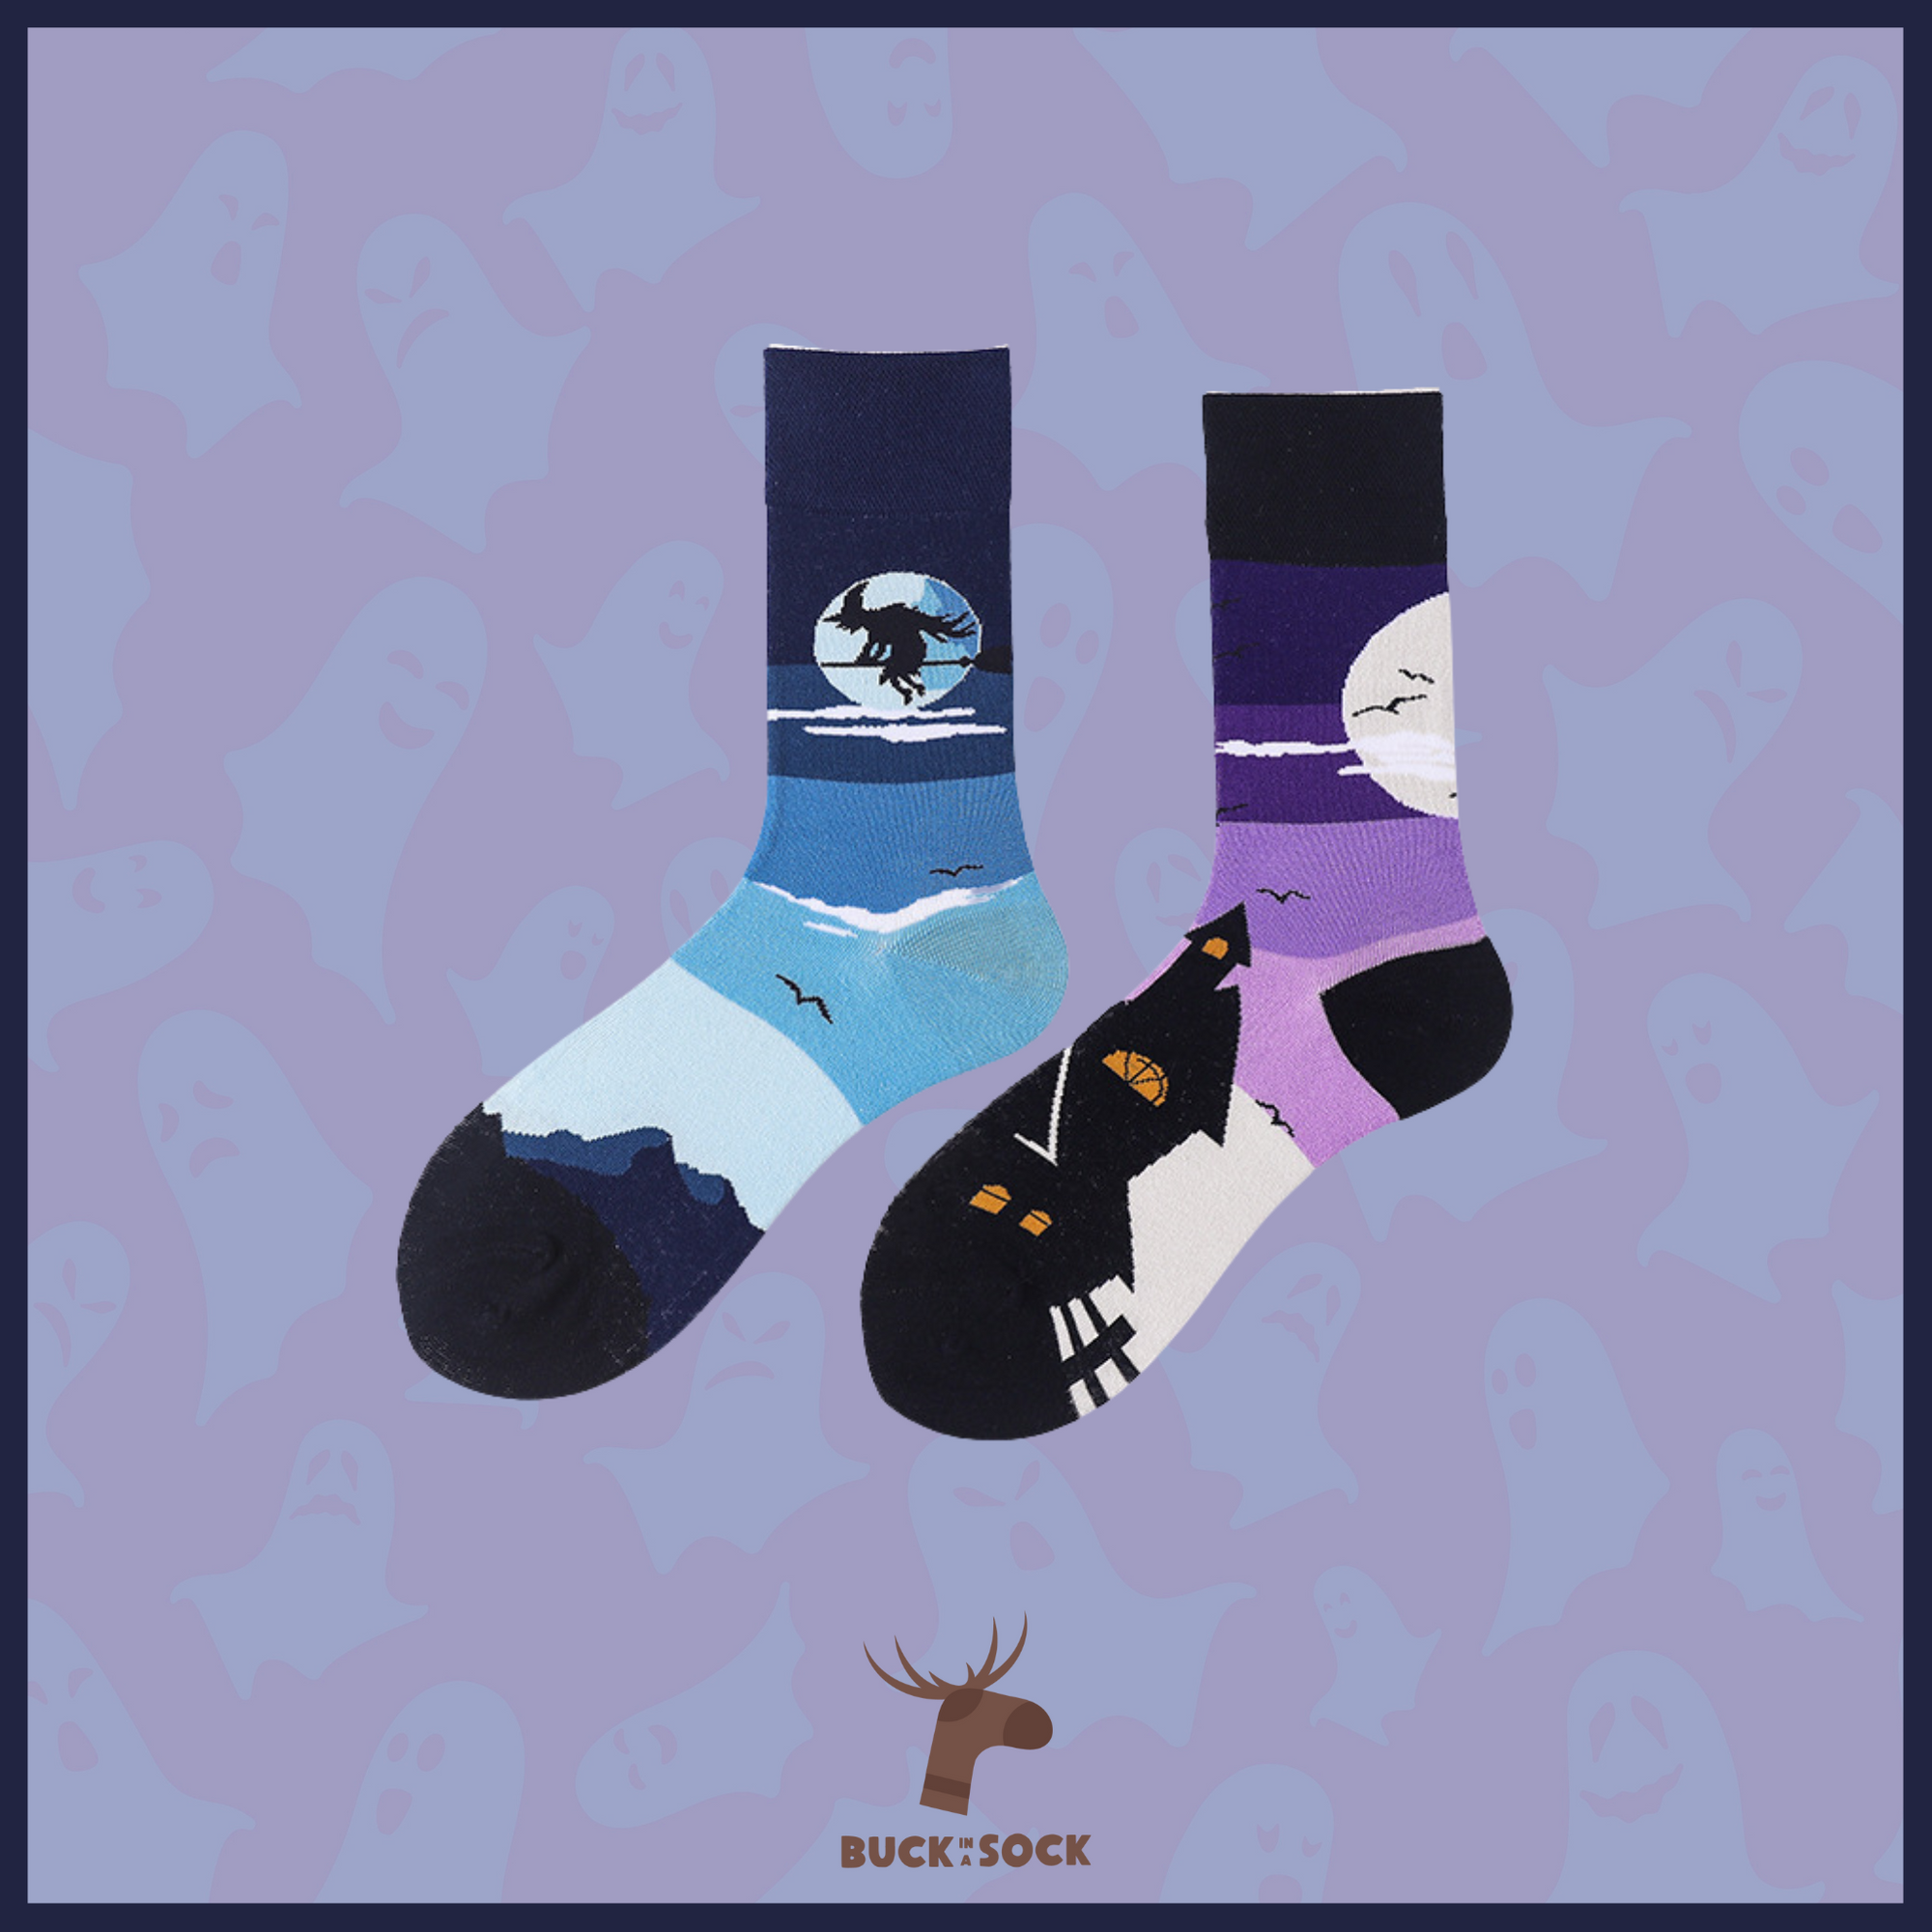 Epifanhalloween - Buck in a sock